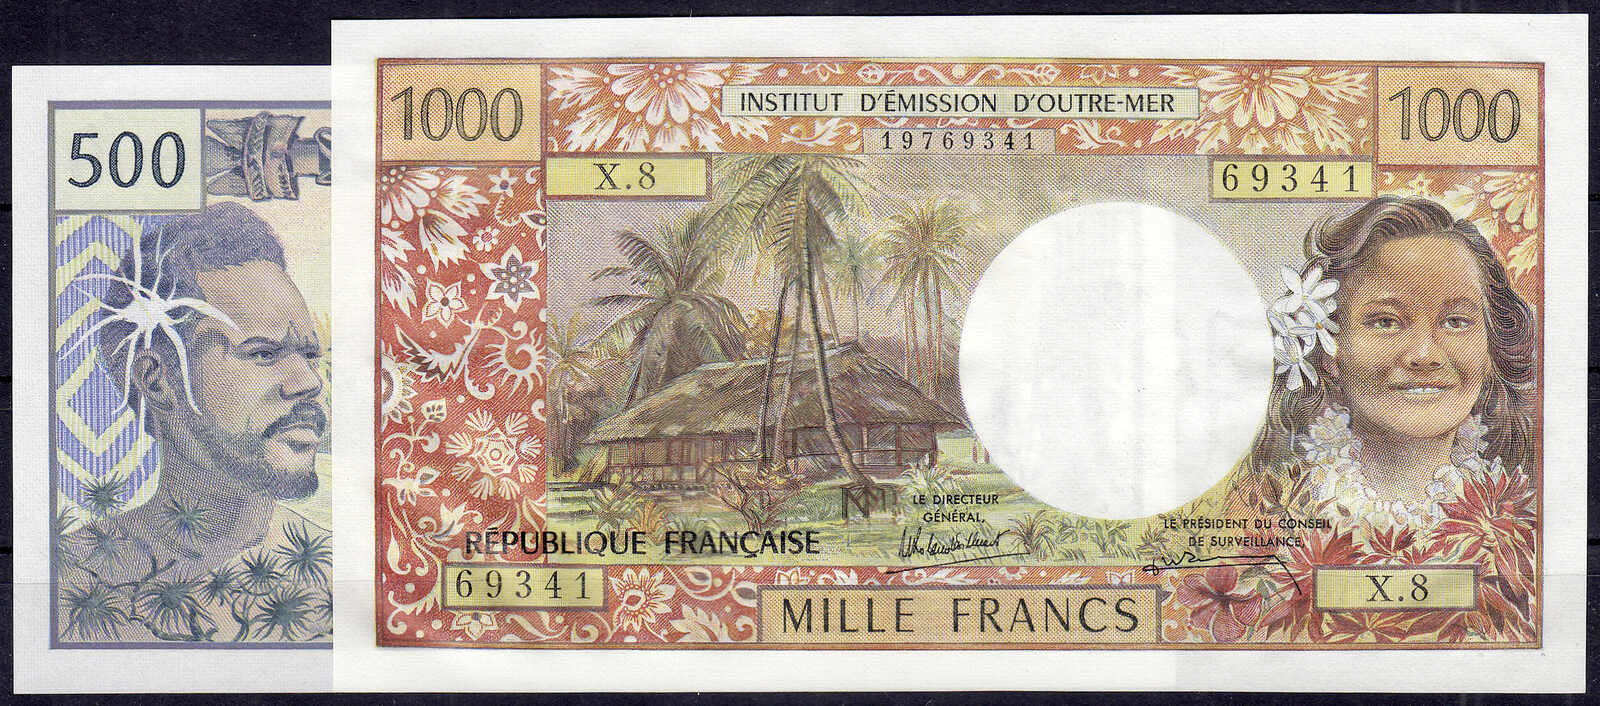 110.580.130: Banknoten - Ozeanien - Tahiti